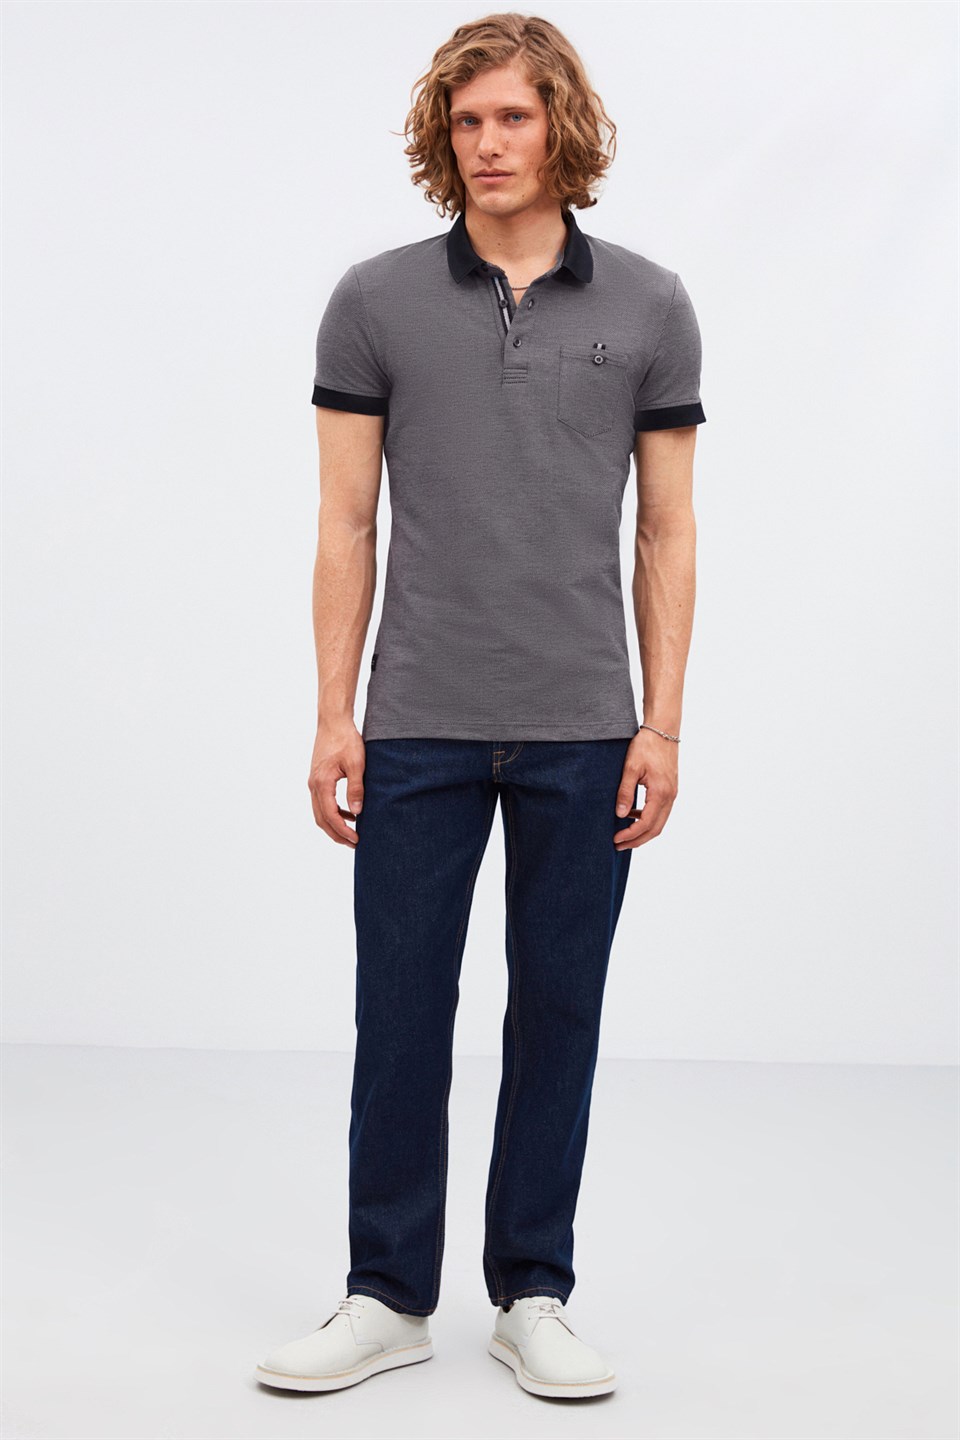 NEWPORT Lacivert Erkek Kontrast Renk    Polo  Slim Fit T-Shirt